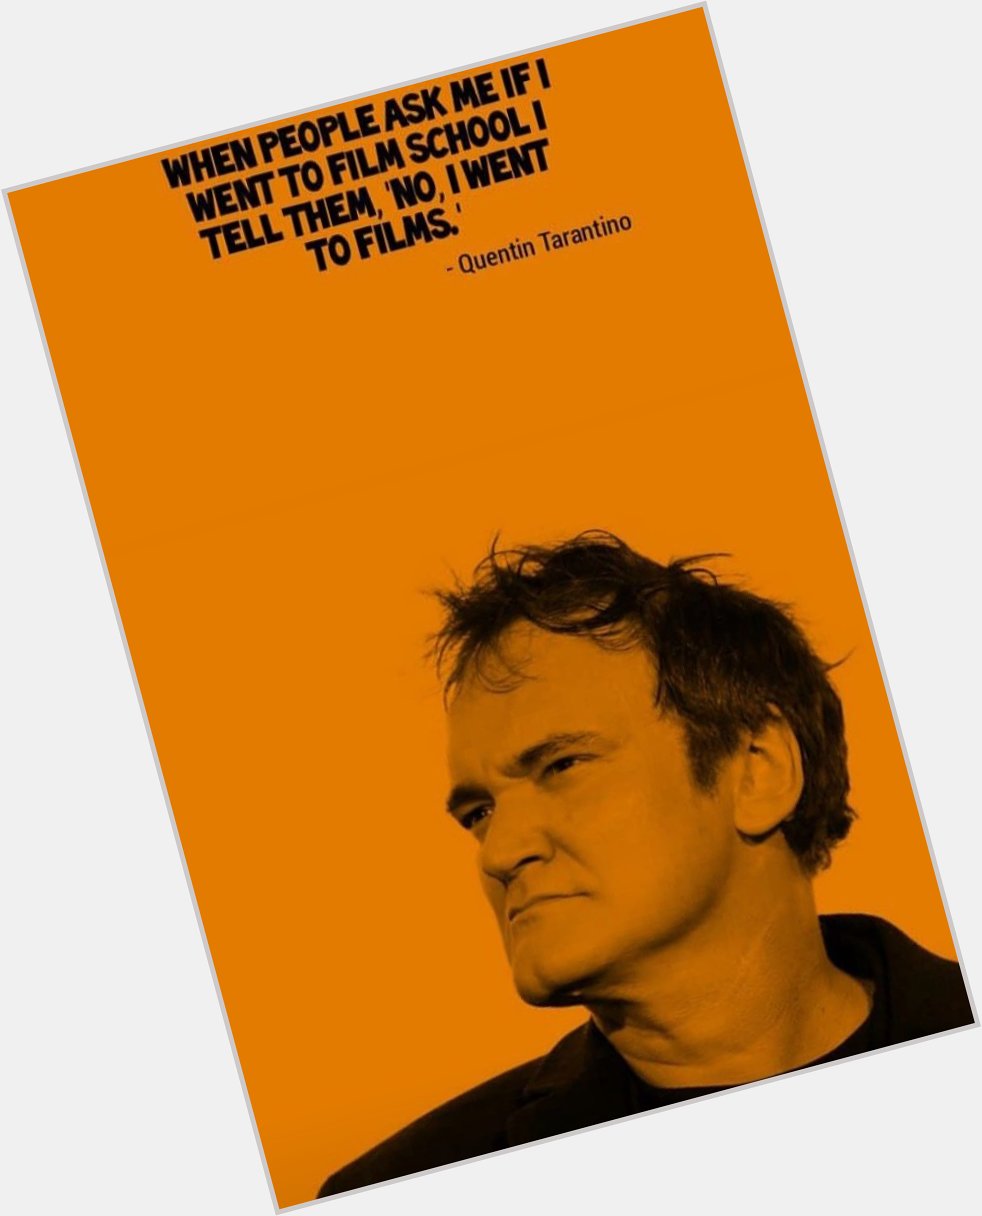 Happy 60th birthday Quentin Tarantino. 